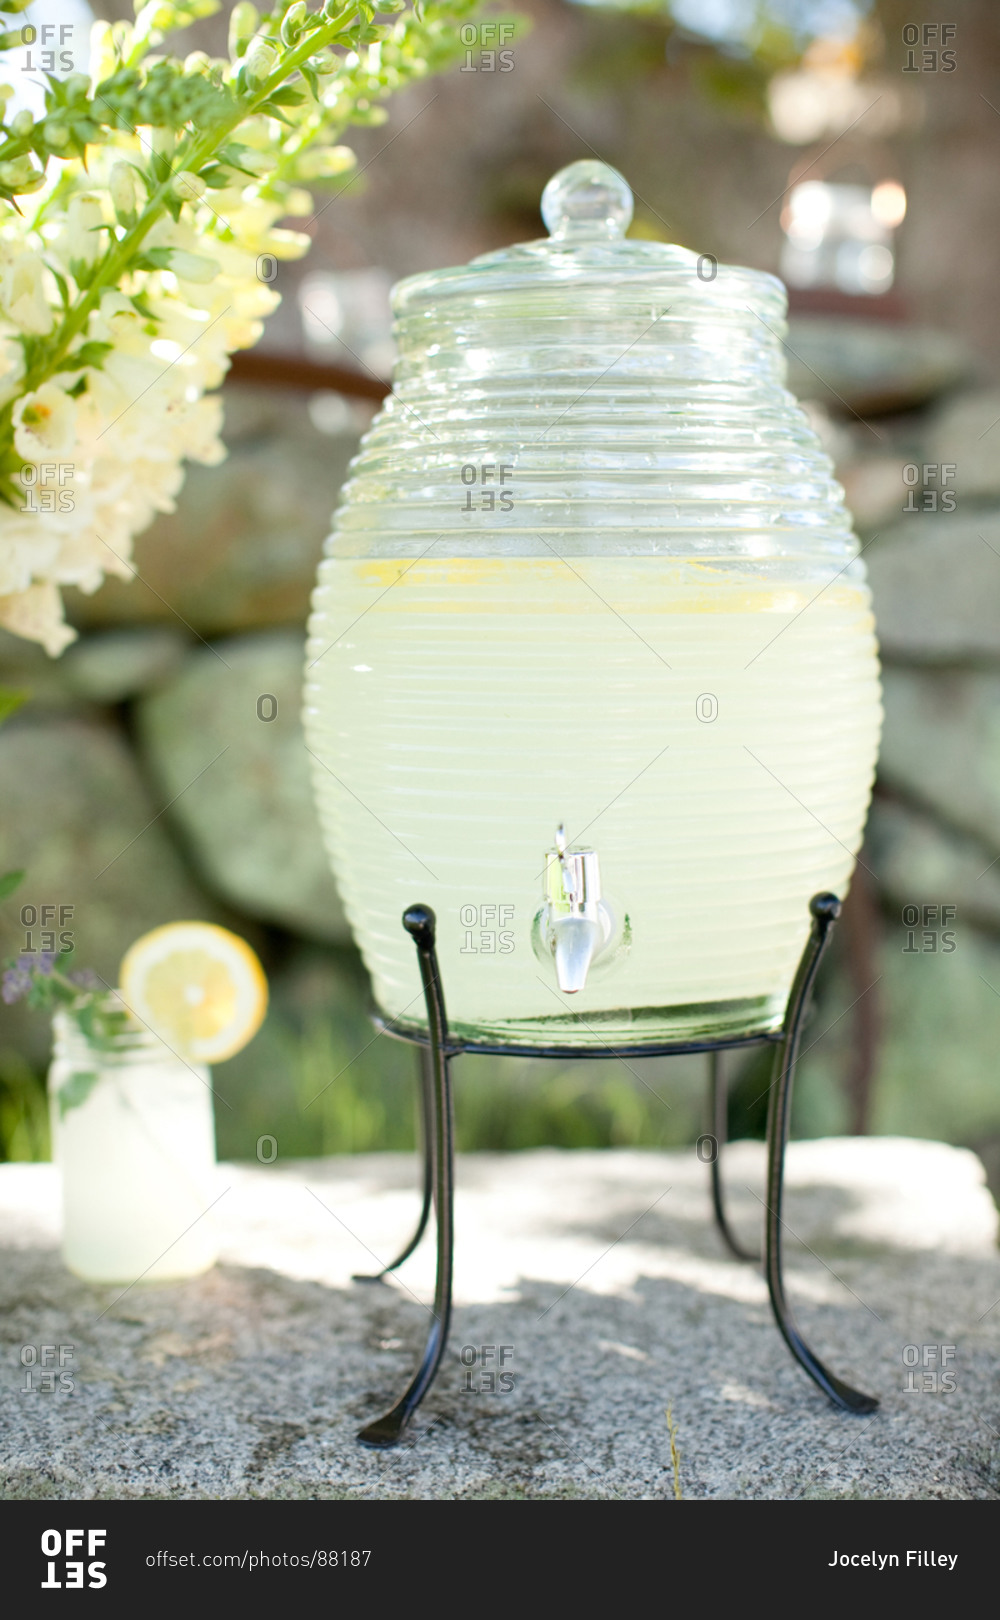 Beverage dispenser with fresh lemonade served in garden